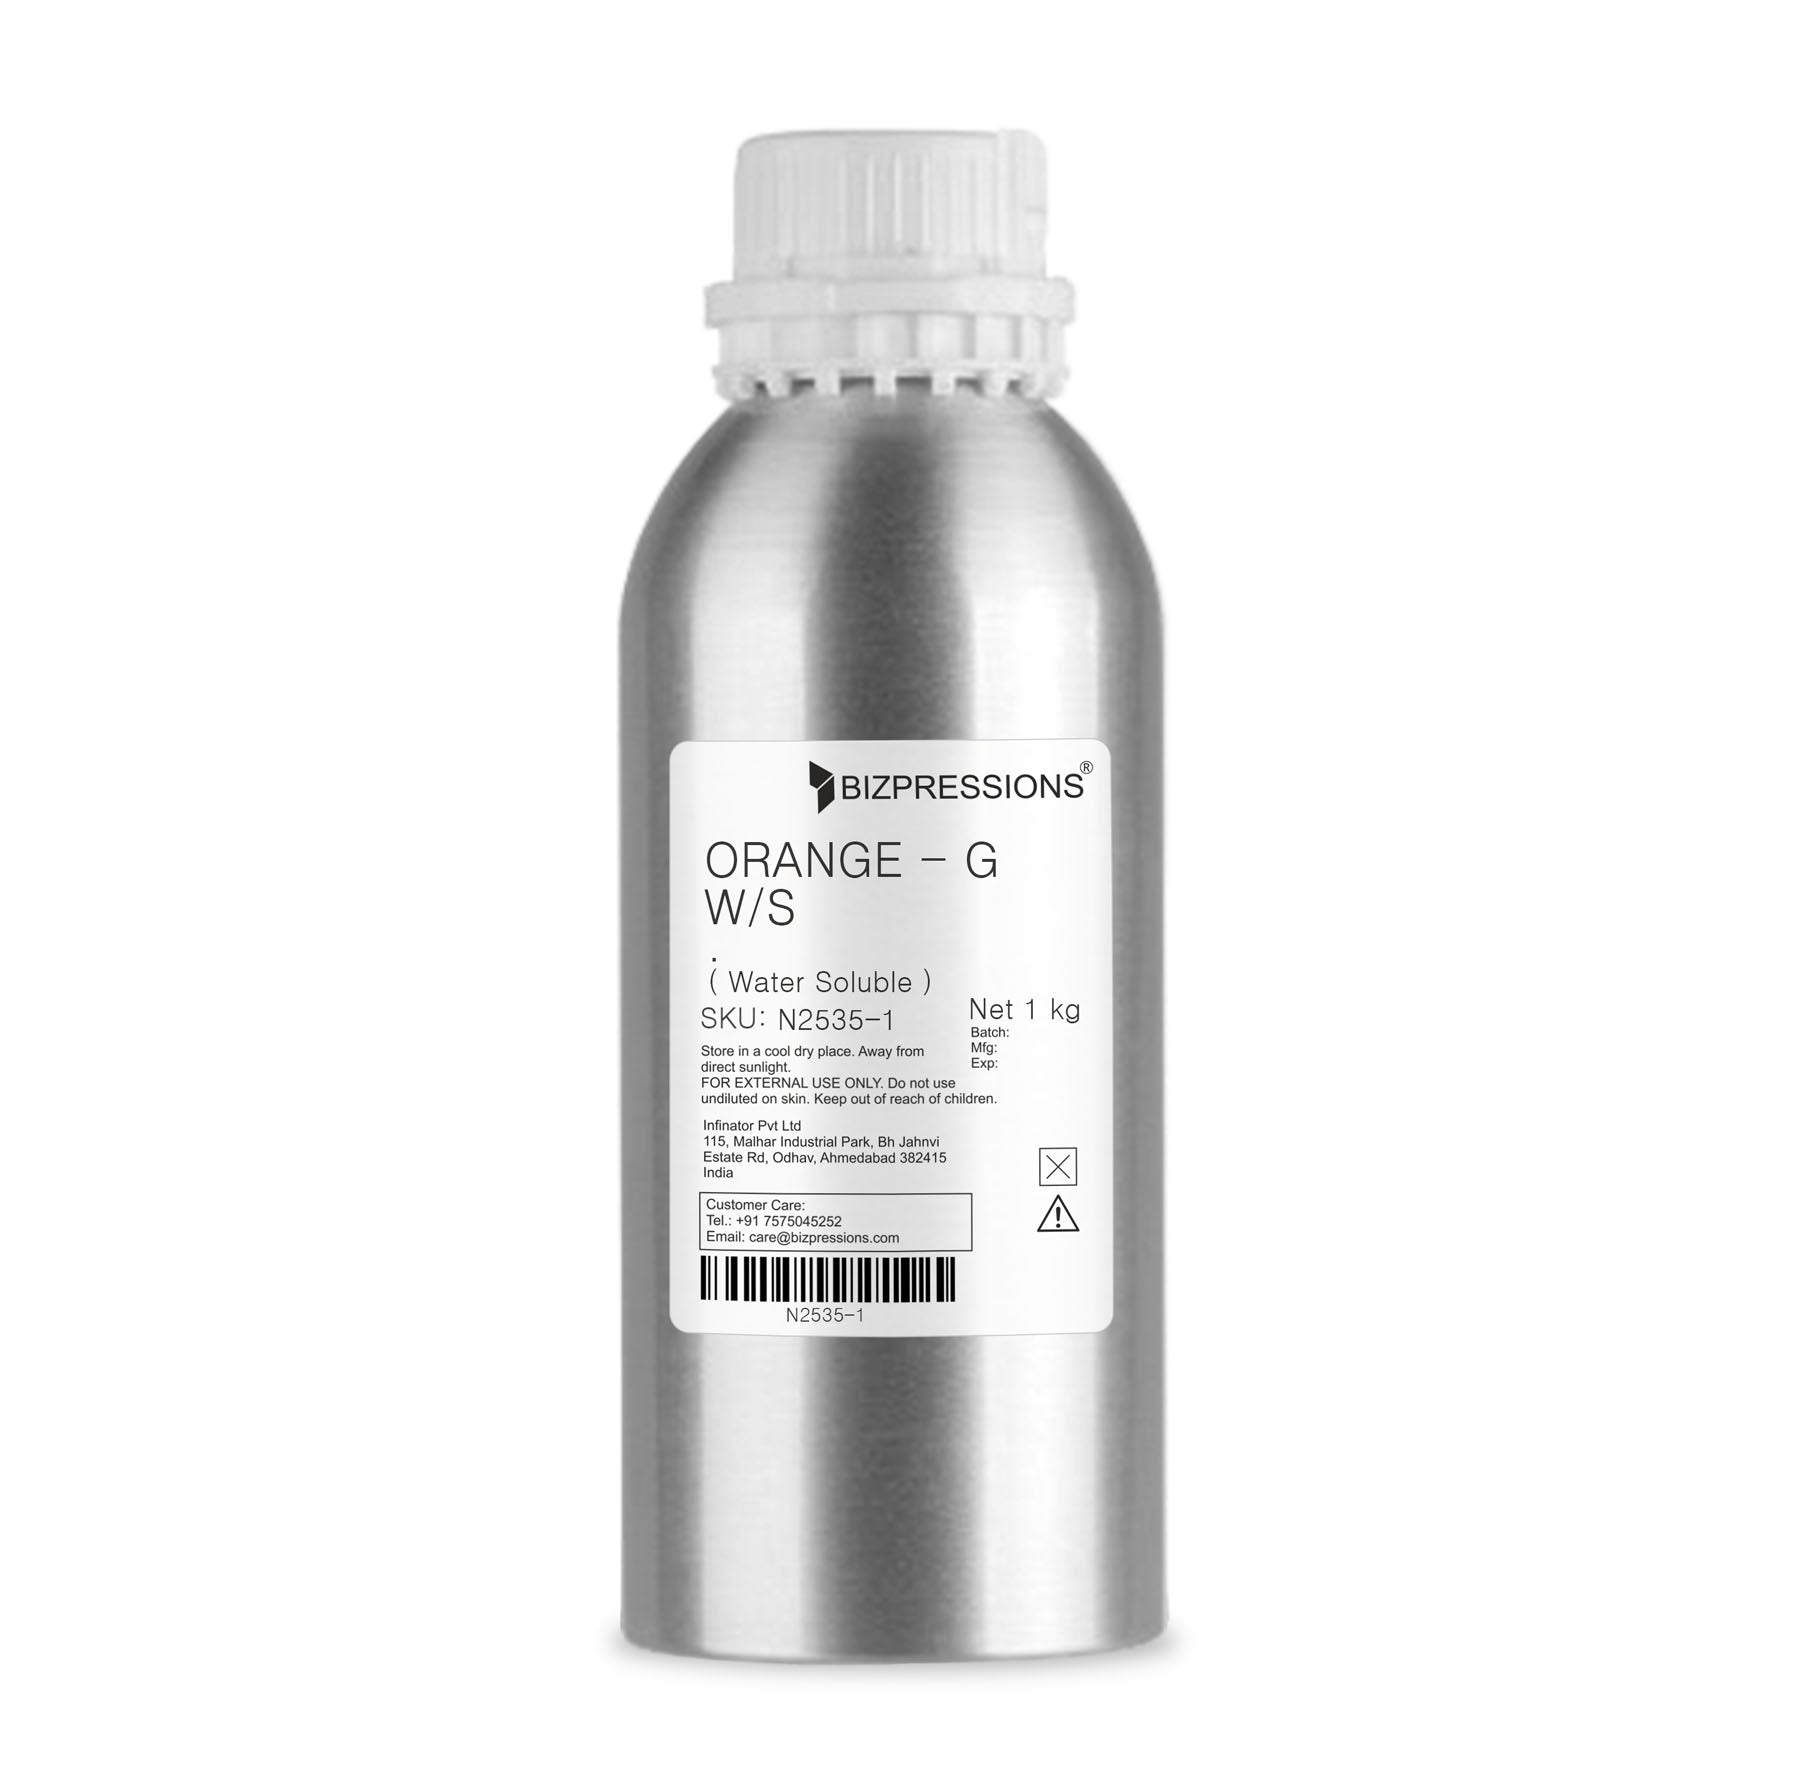 ORANGE - G W/S - Fragrance (Water Soluble)